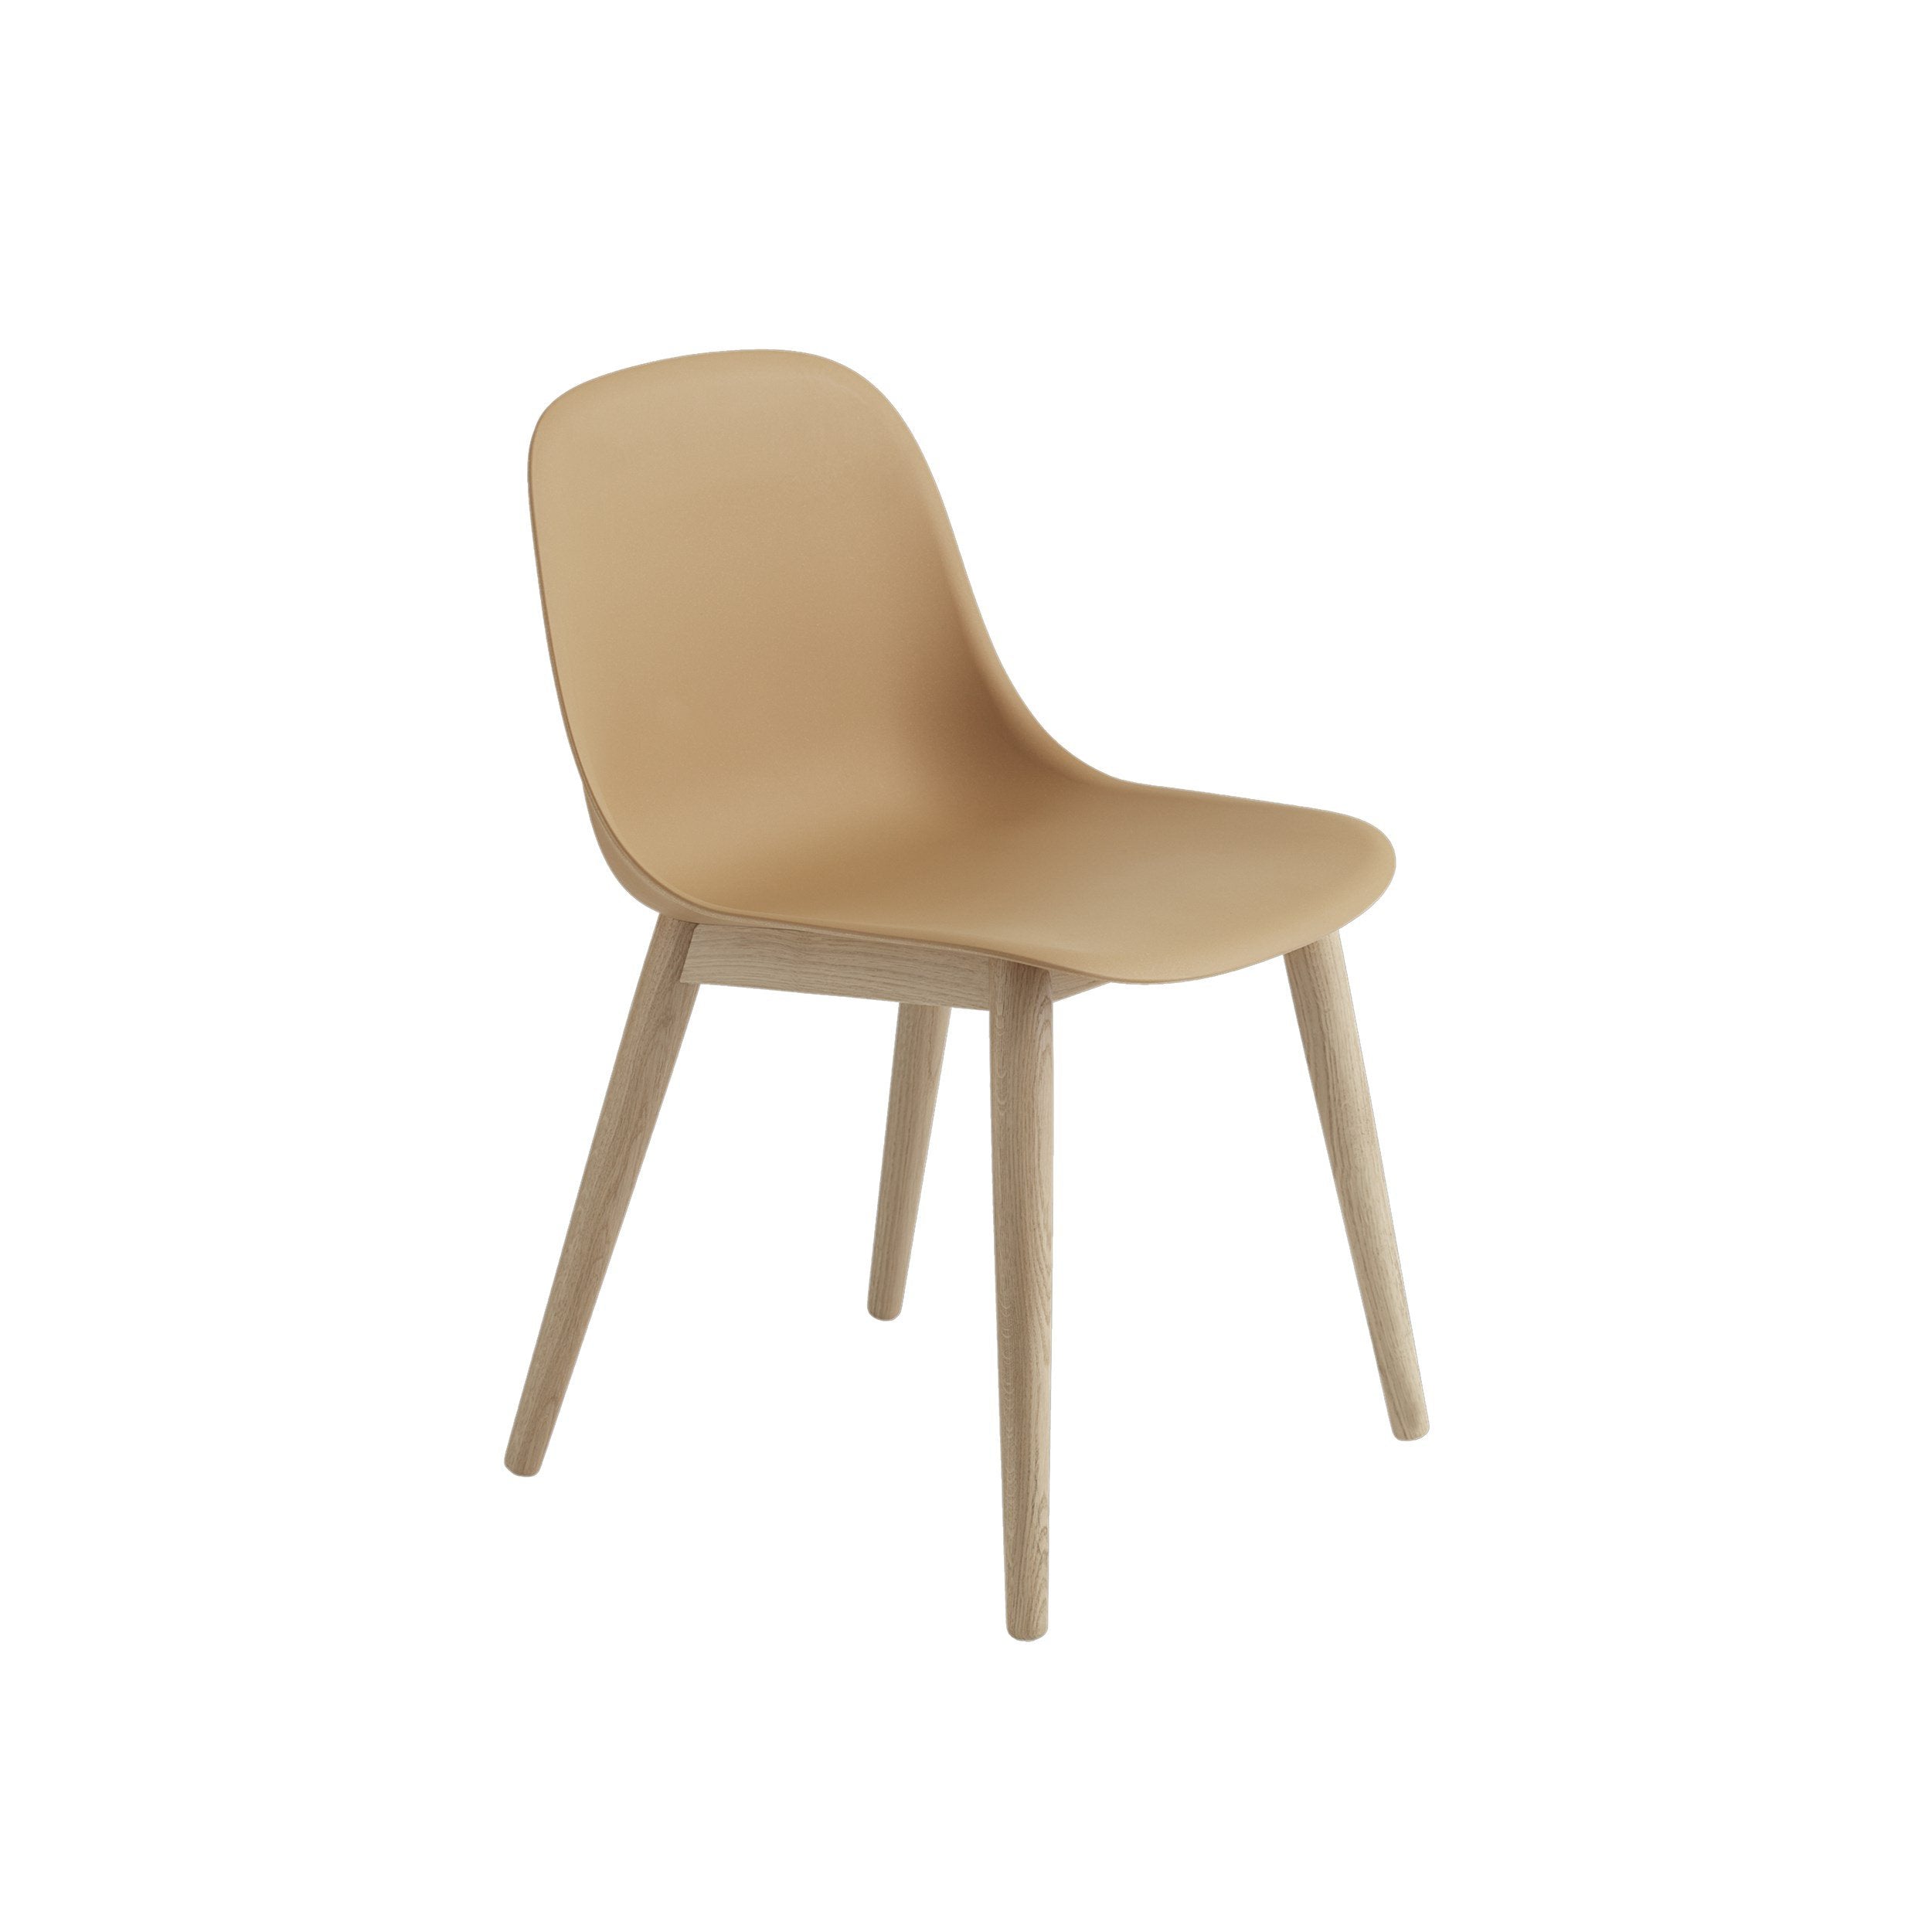 Pierras de madera de silla lateral de fibra muuto, asiento de fibra, marrón